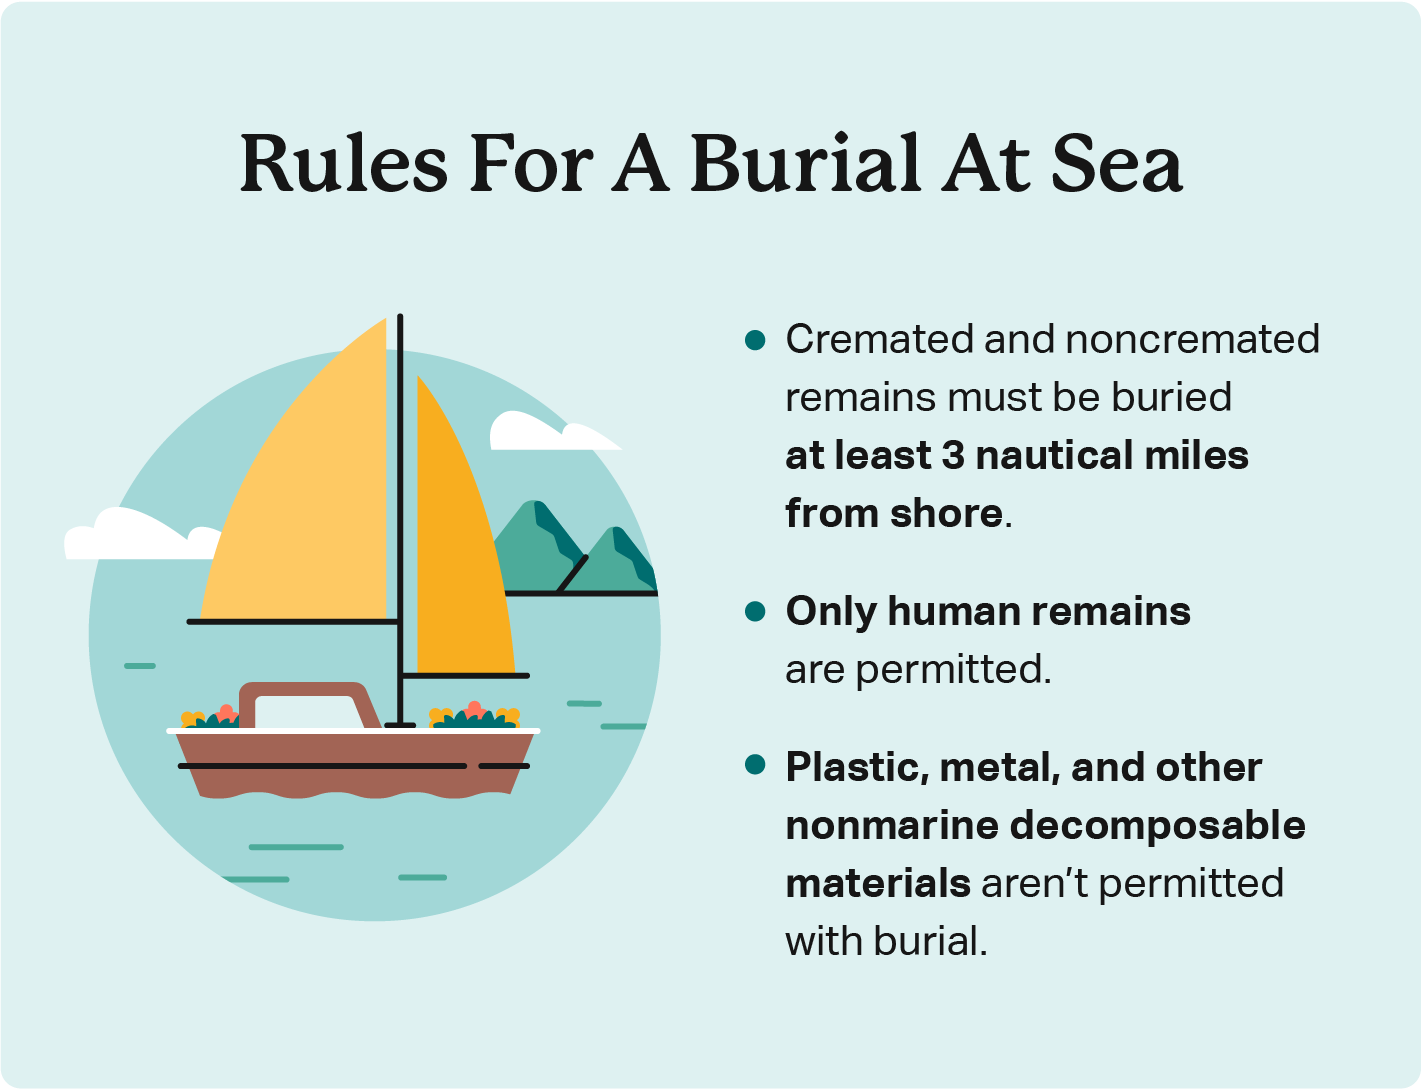 Illustration of a sailboat highlights rules for burials at sea.